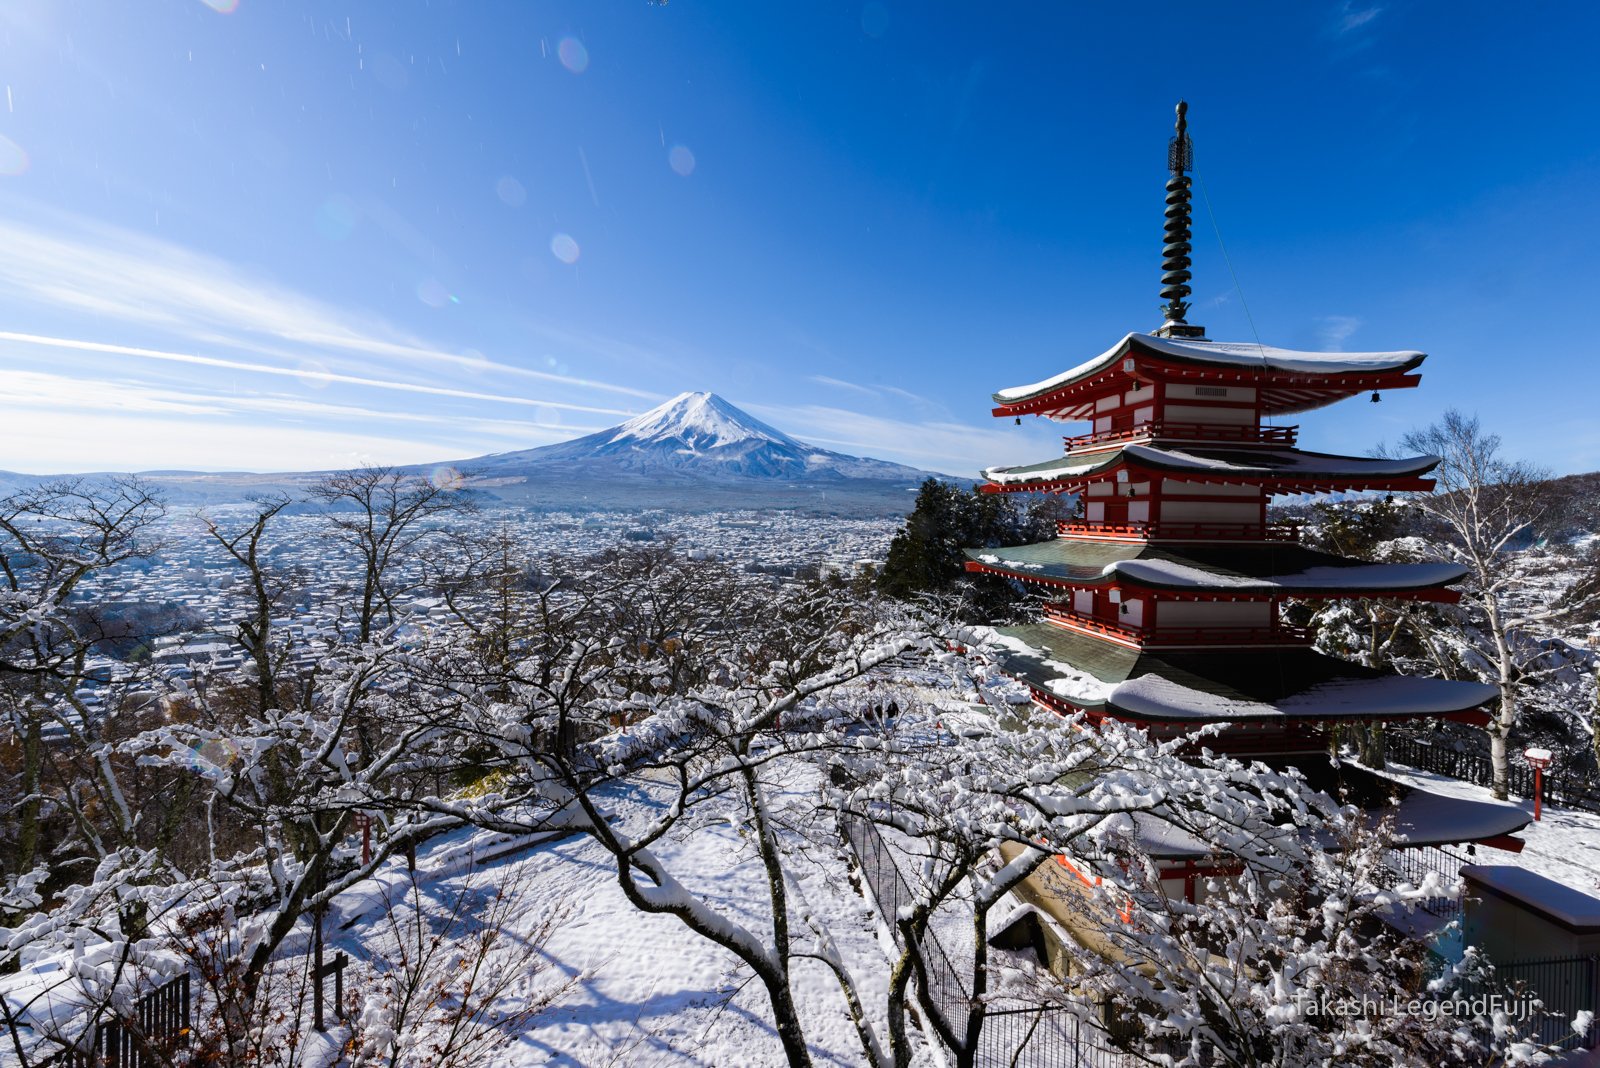 Fuji,Japan,mountain,snow,pagoda,tree,sky,blue,white,, Takashi